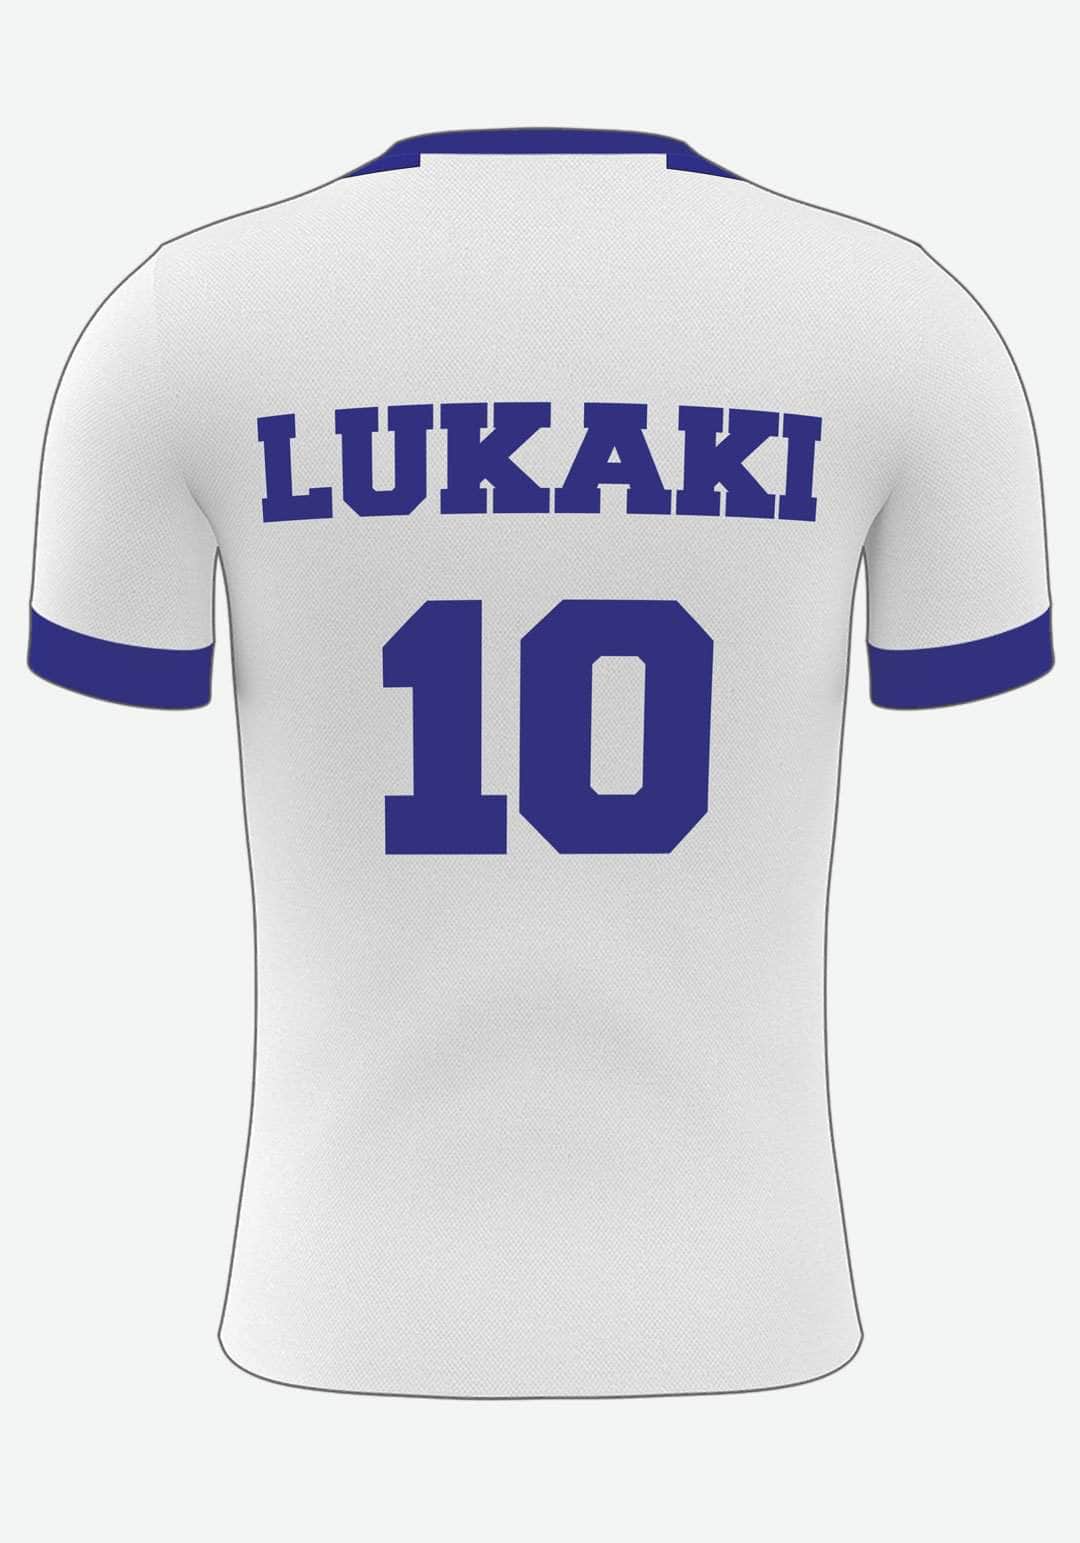 Se Hvid / blå Fodboldplakat - med eget navn og nummer, 21x30 hos Lukaki.dk